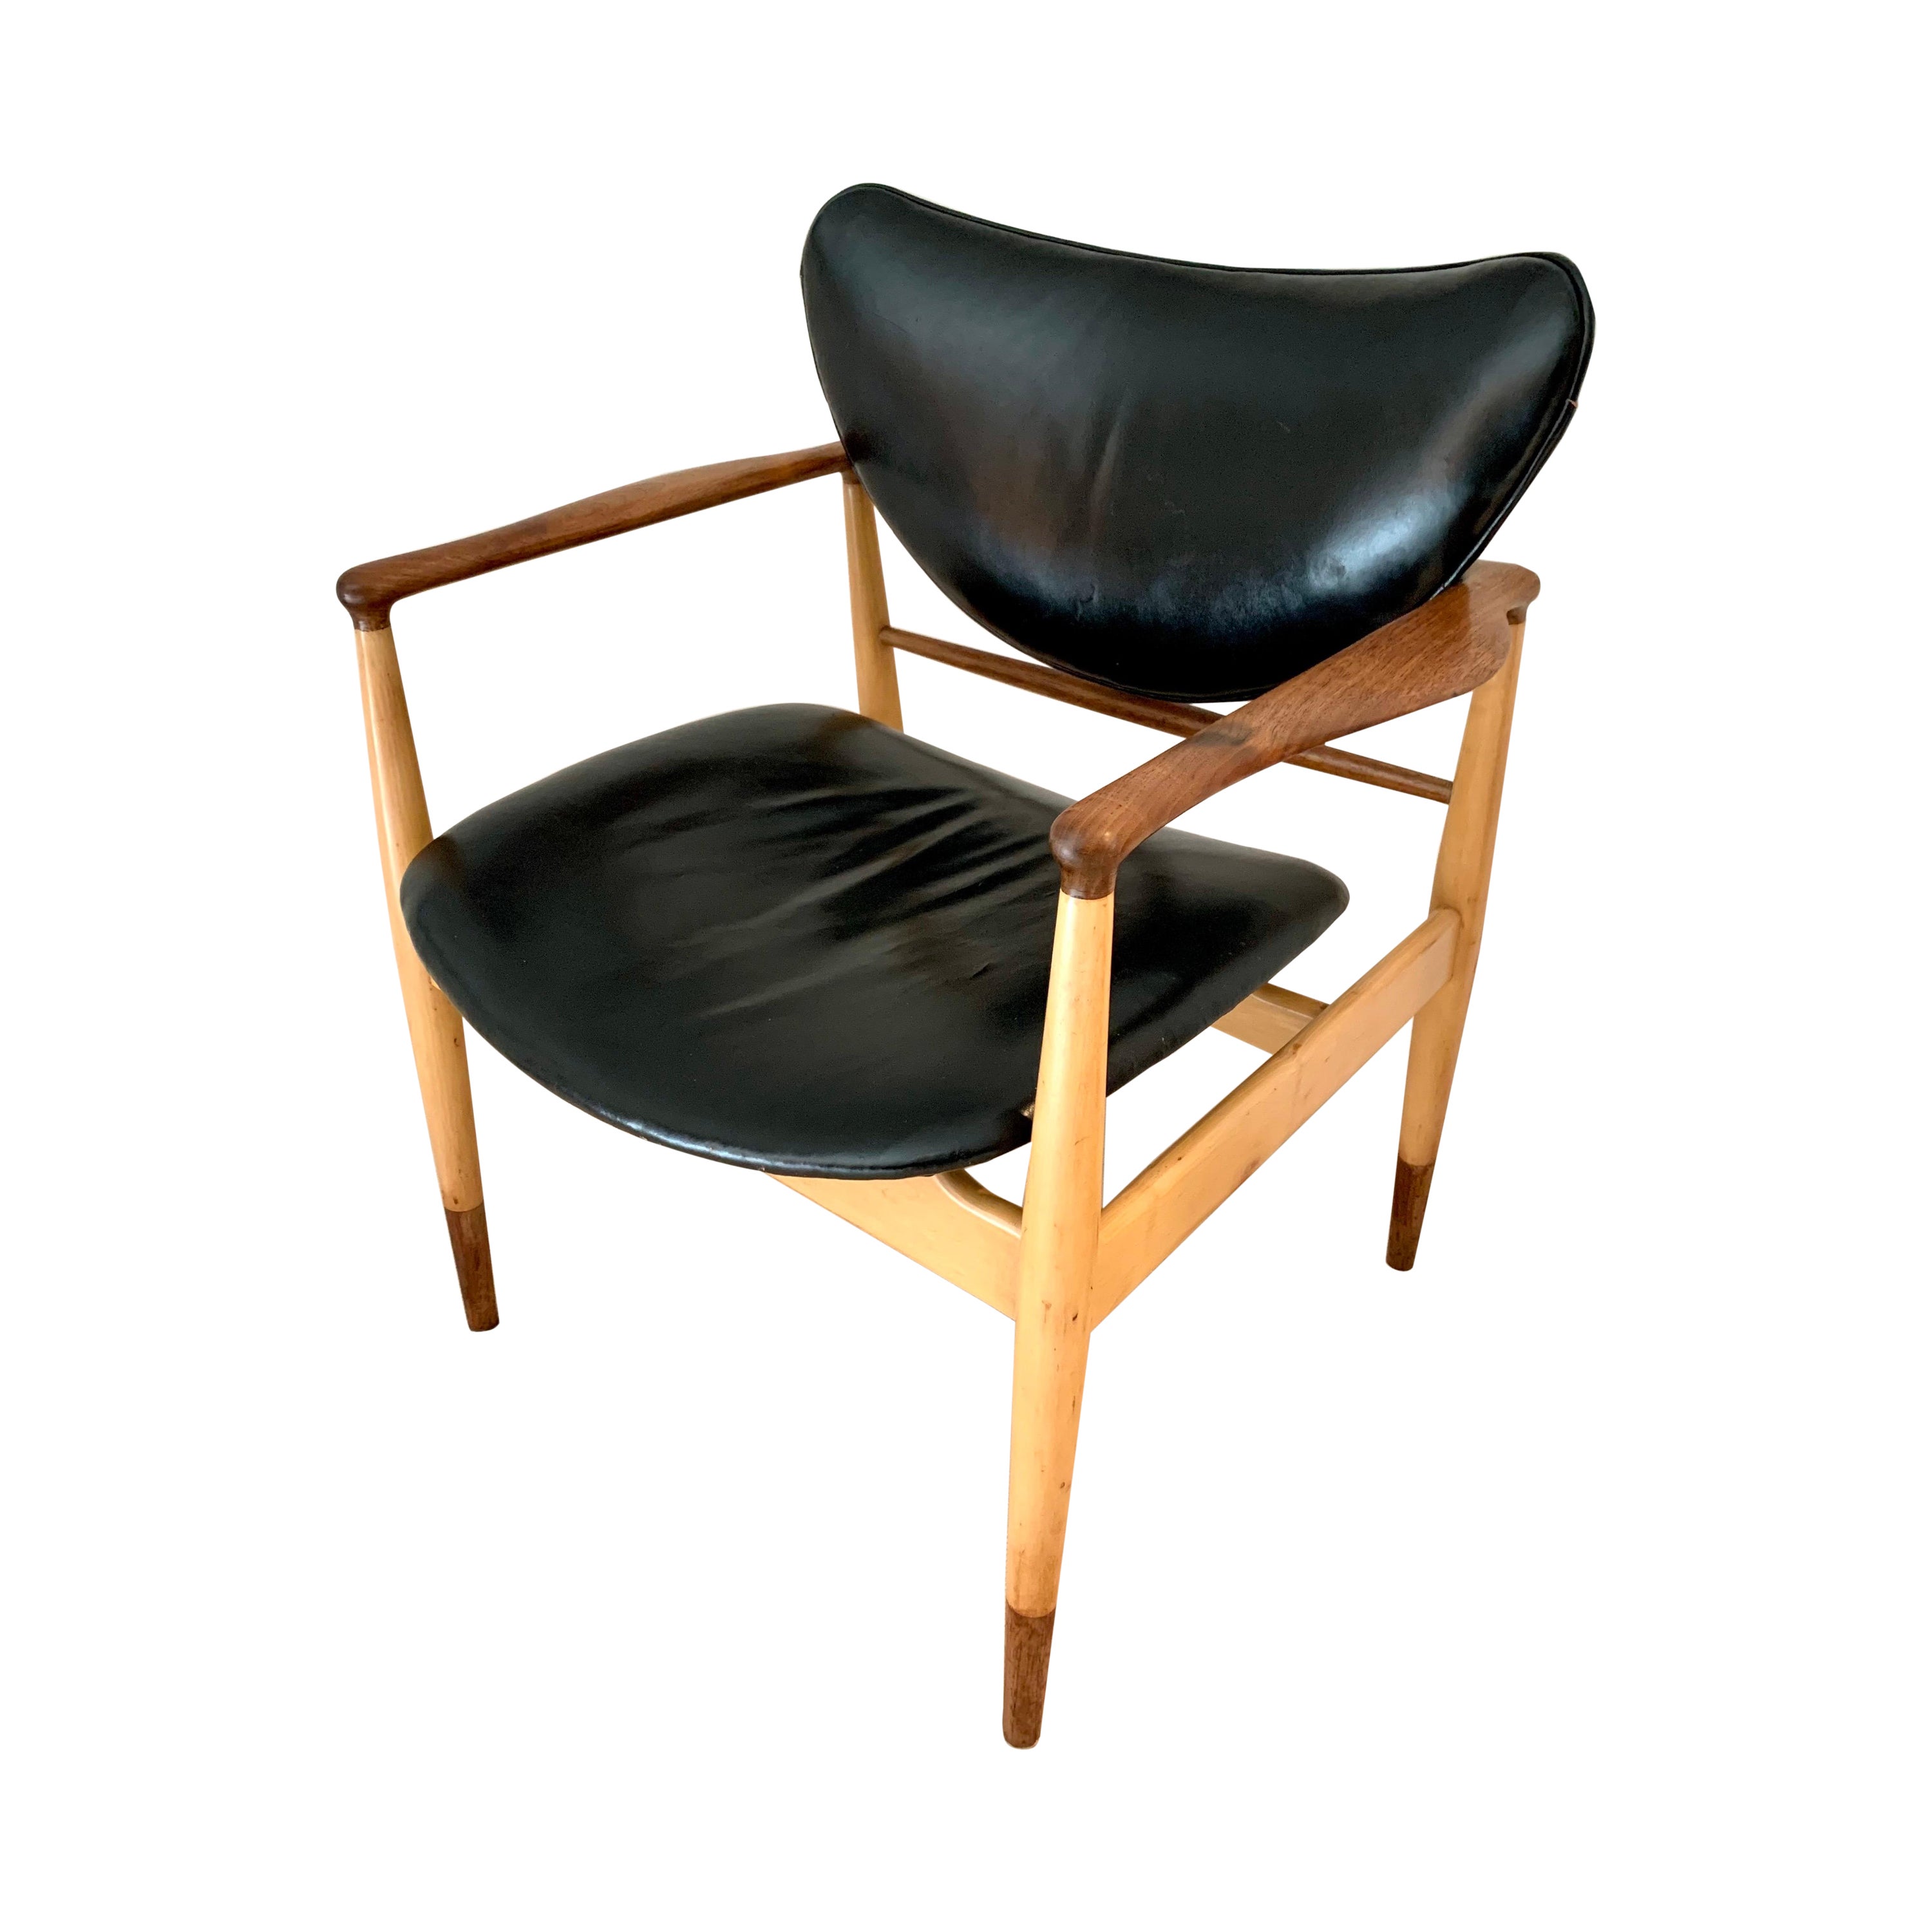 Classic Danish Modern Finn Juhl #48 Rare Maple, Walnut and Leather Chair Vodder